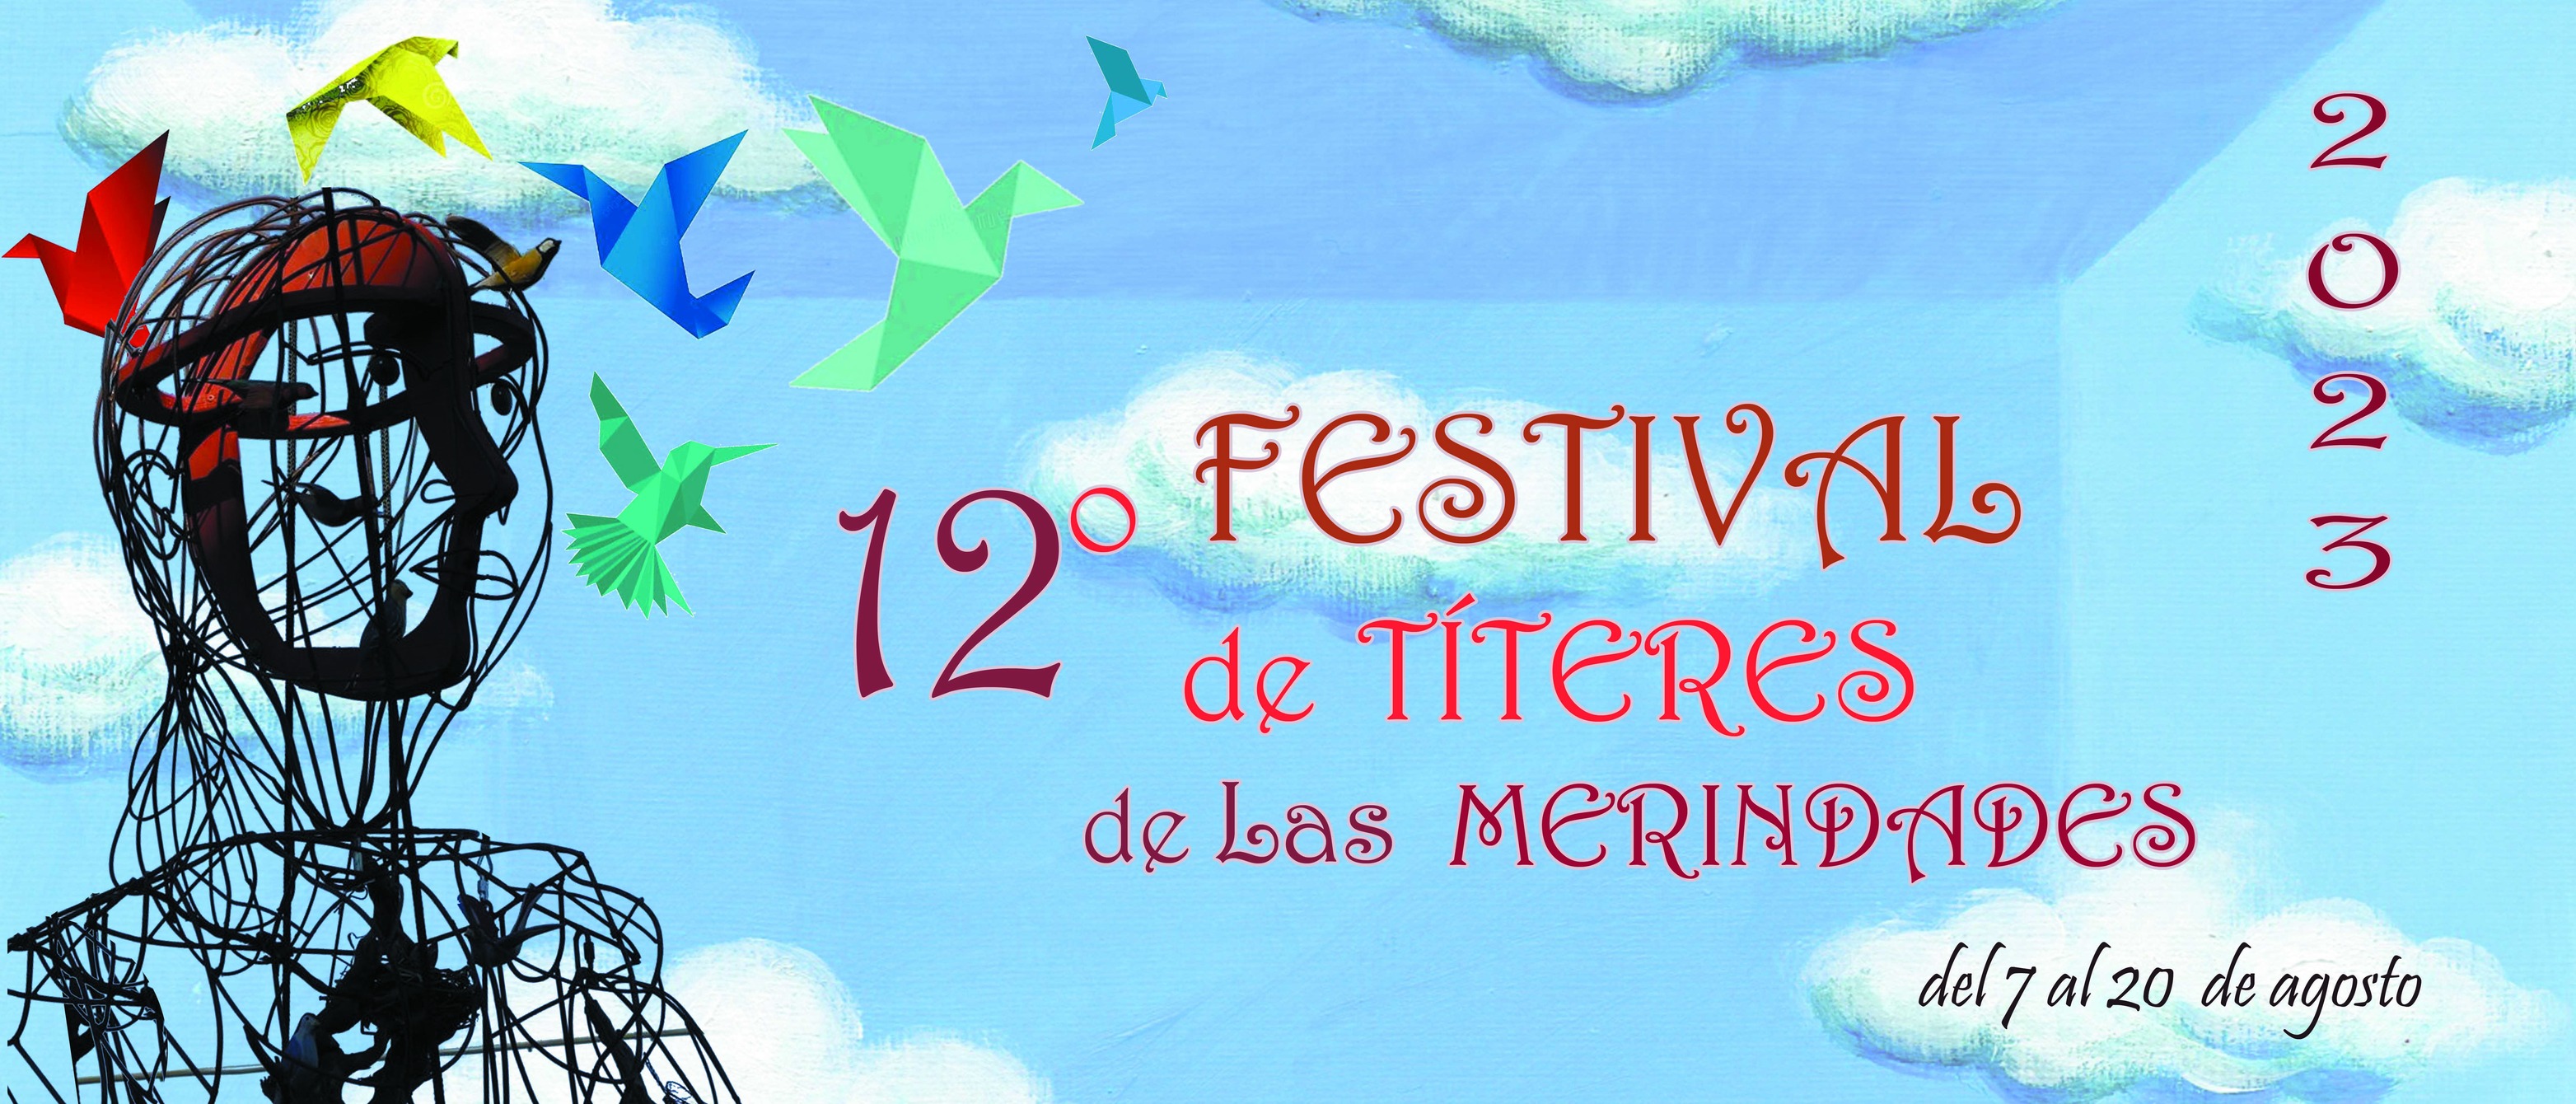 12º Festival de Títeres de Las Merindades